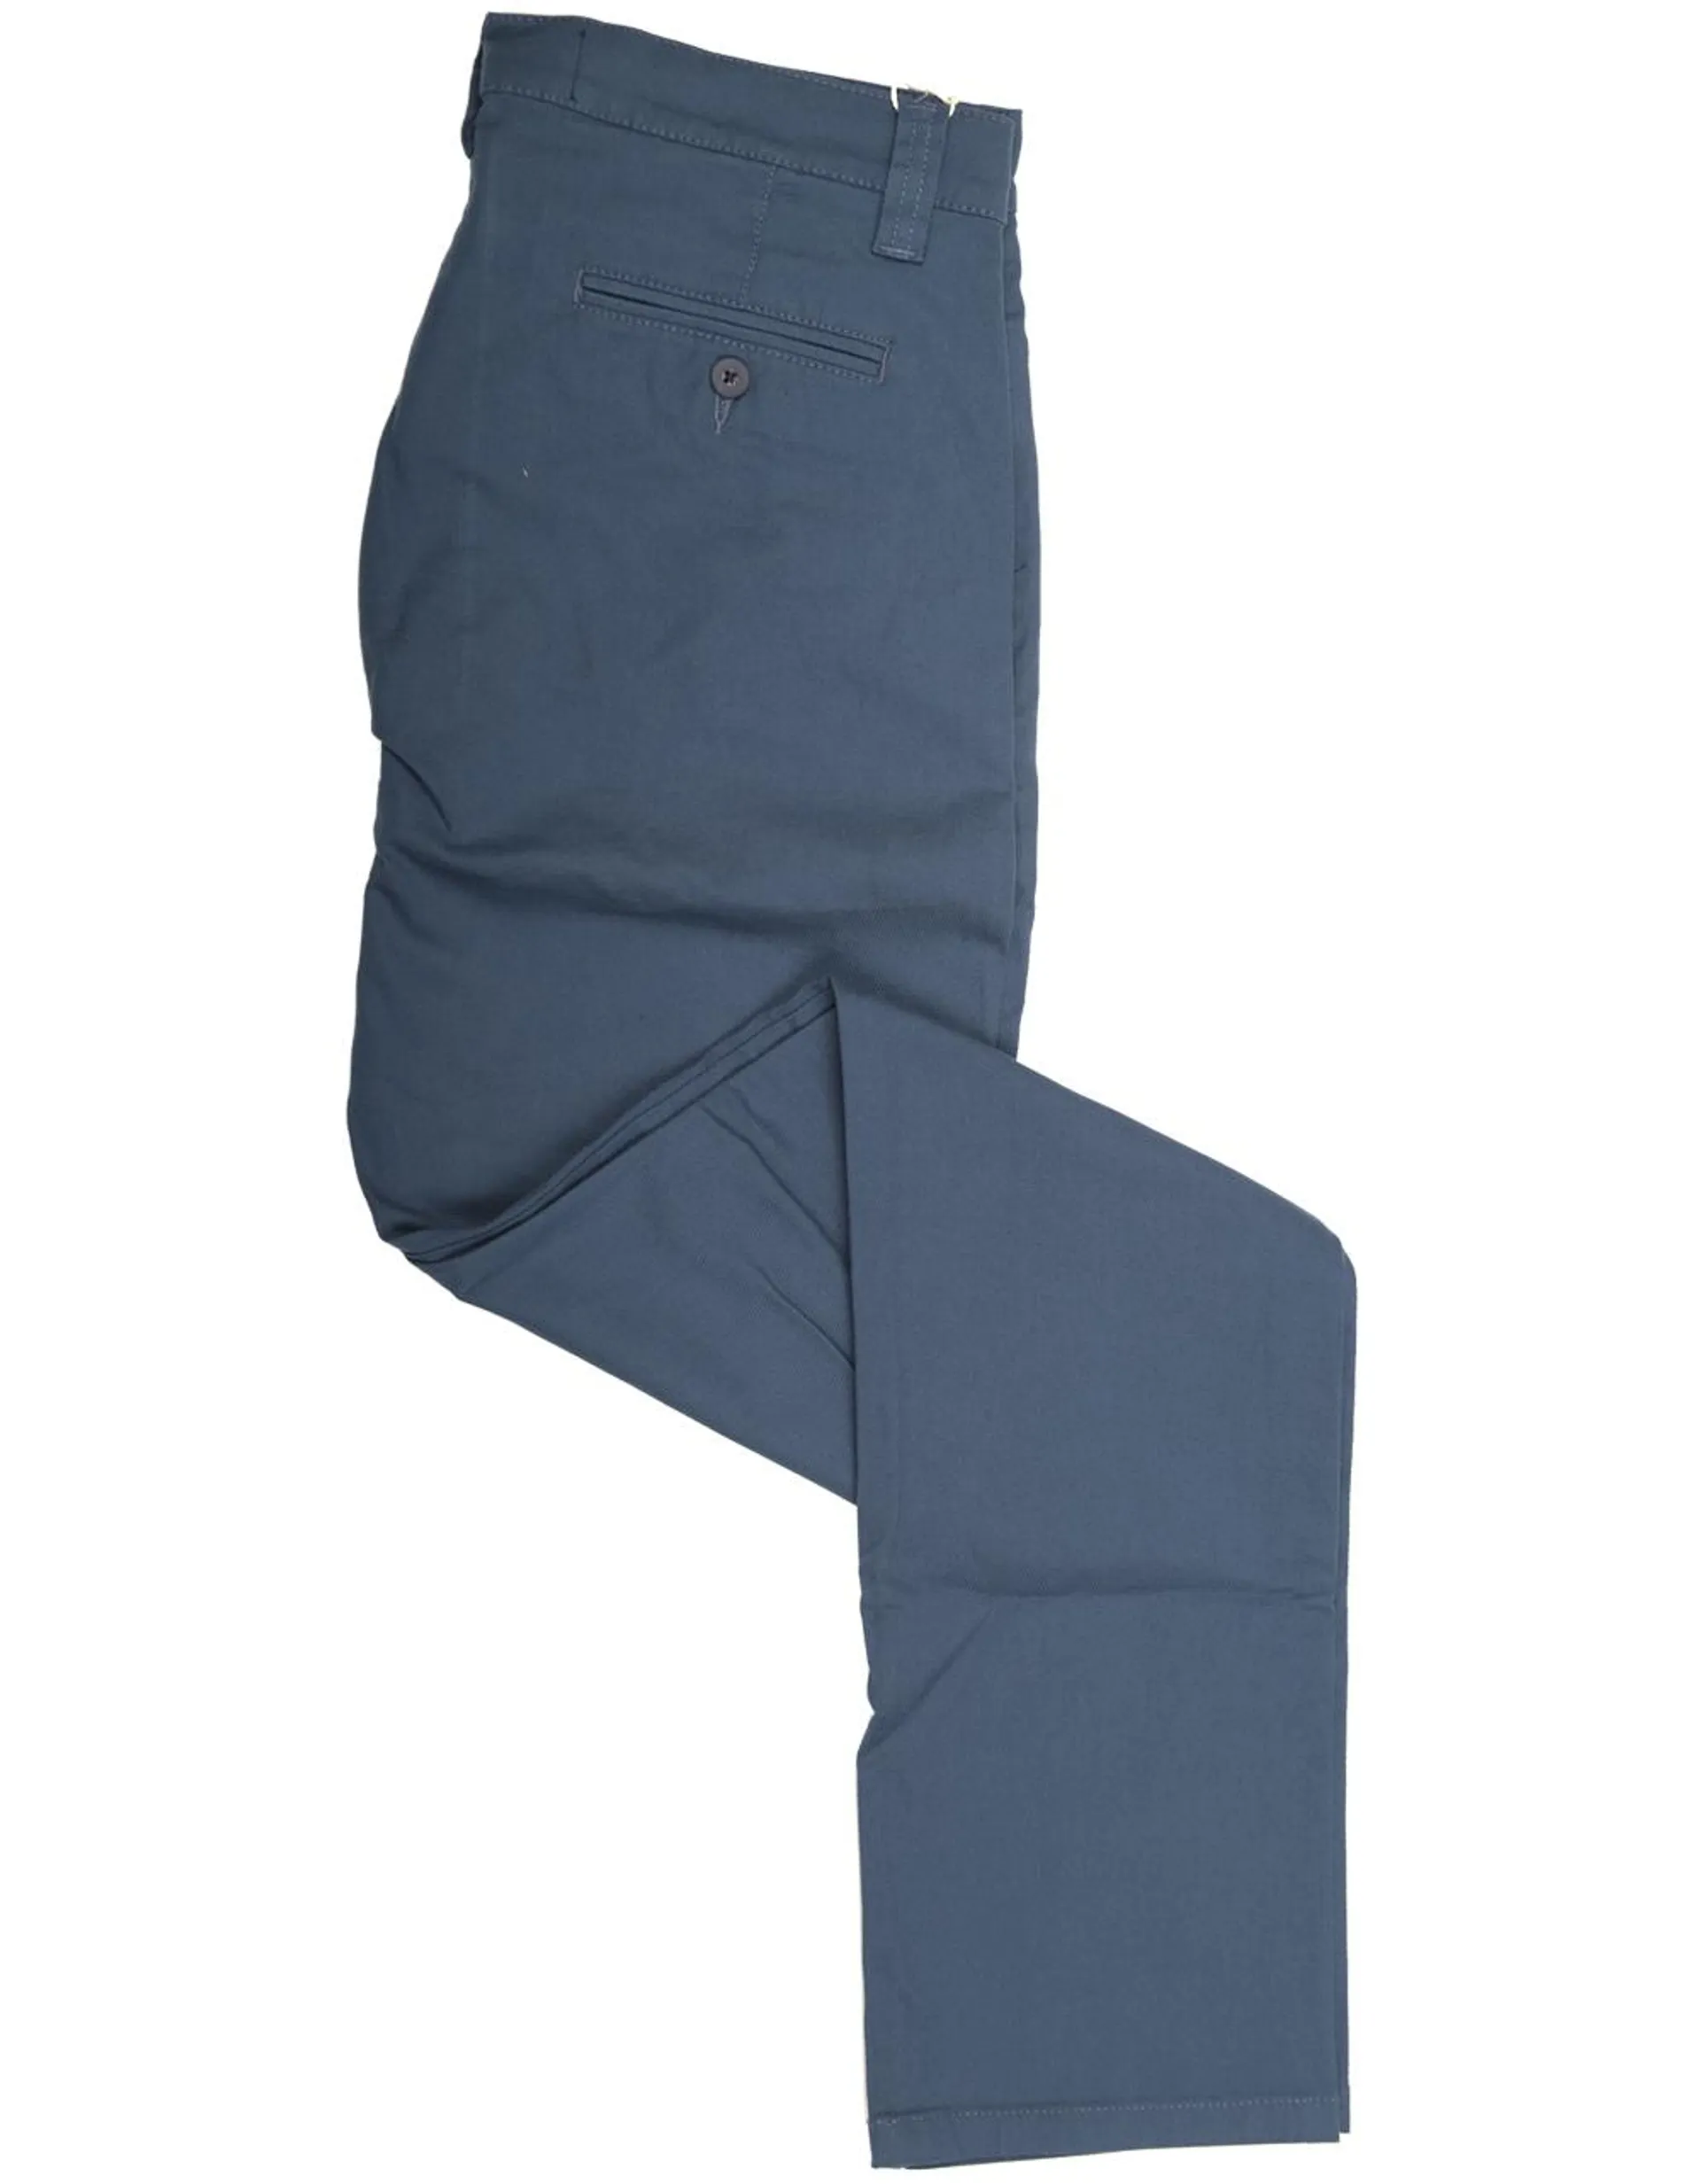 Pantalón Informal Stretch Color Azul Petroleo Oscuro